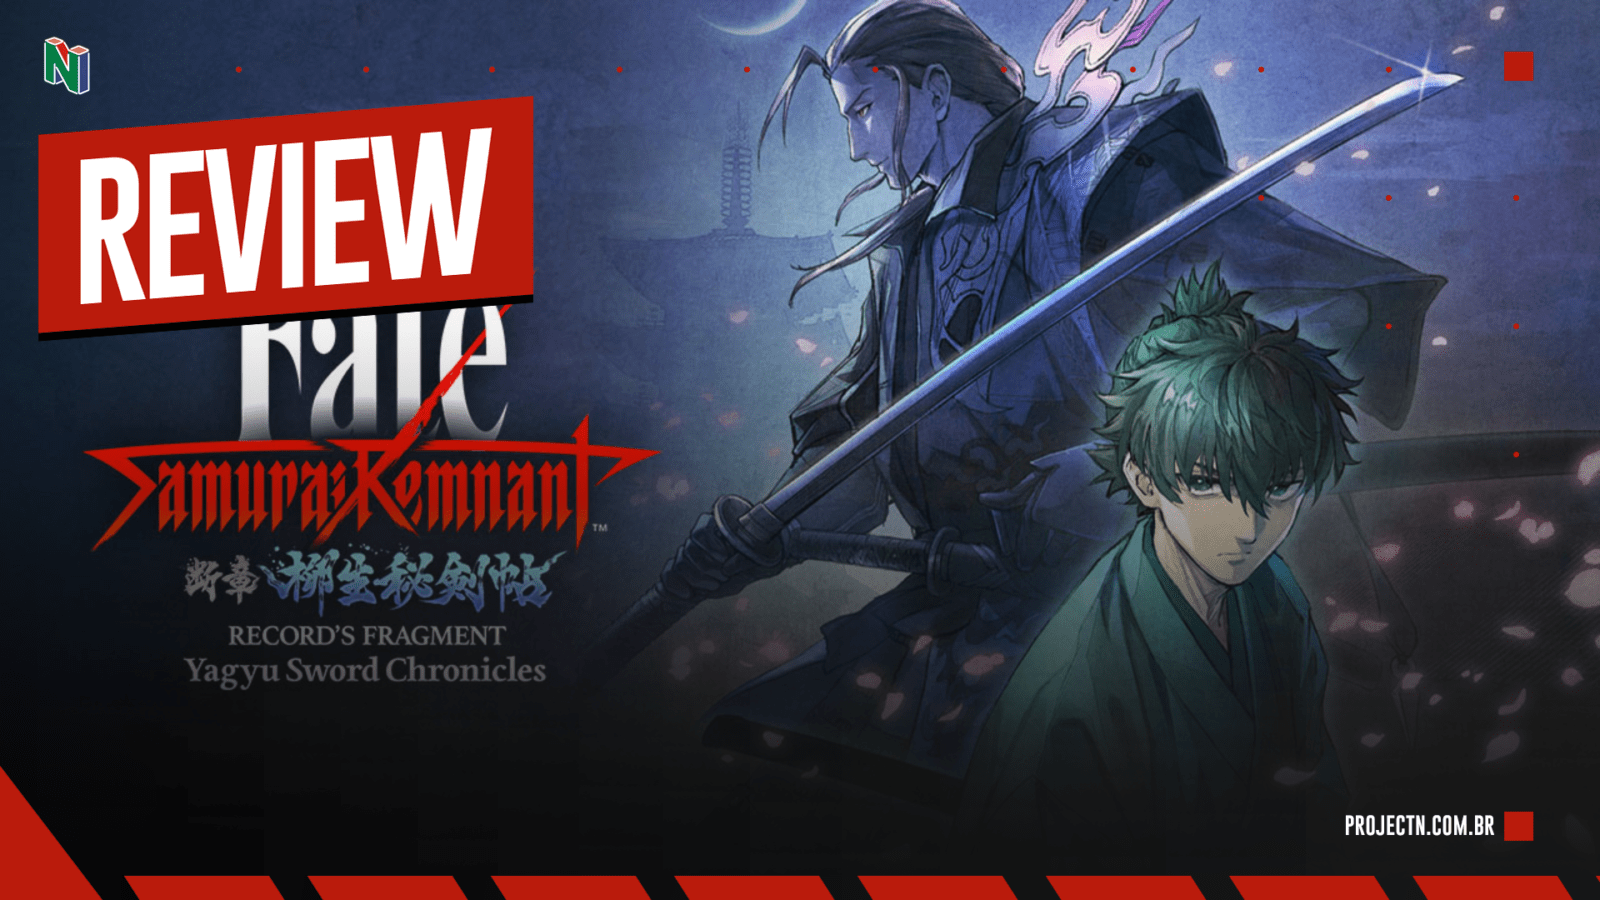 Fate Samurai/Remnant DLC Vol. 2 - Record’s Fragment: Yagyu Sword Chronicles